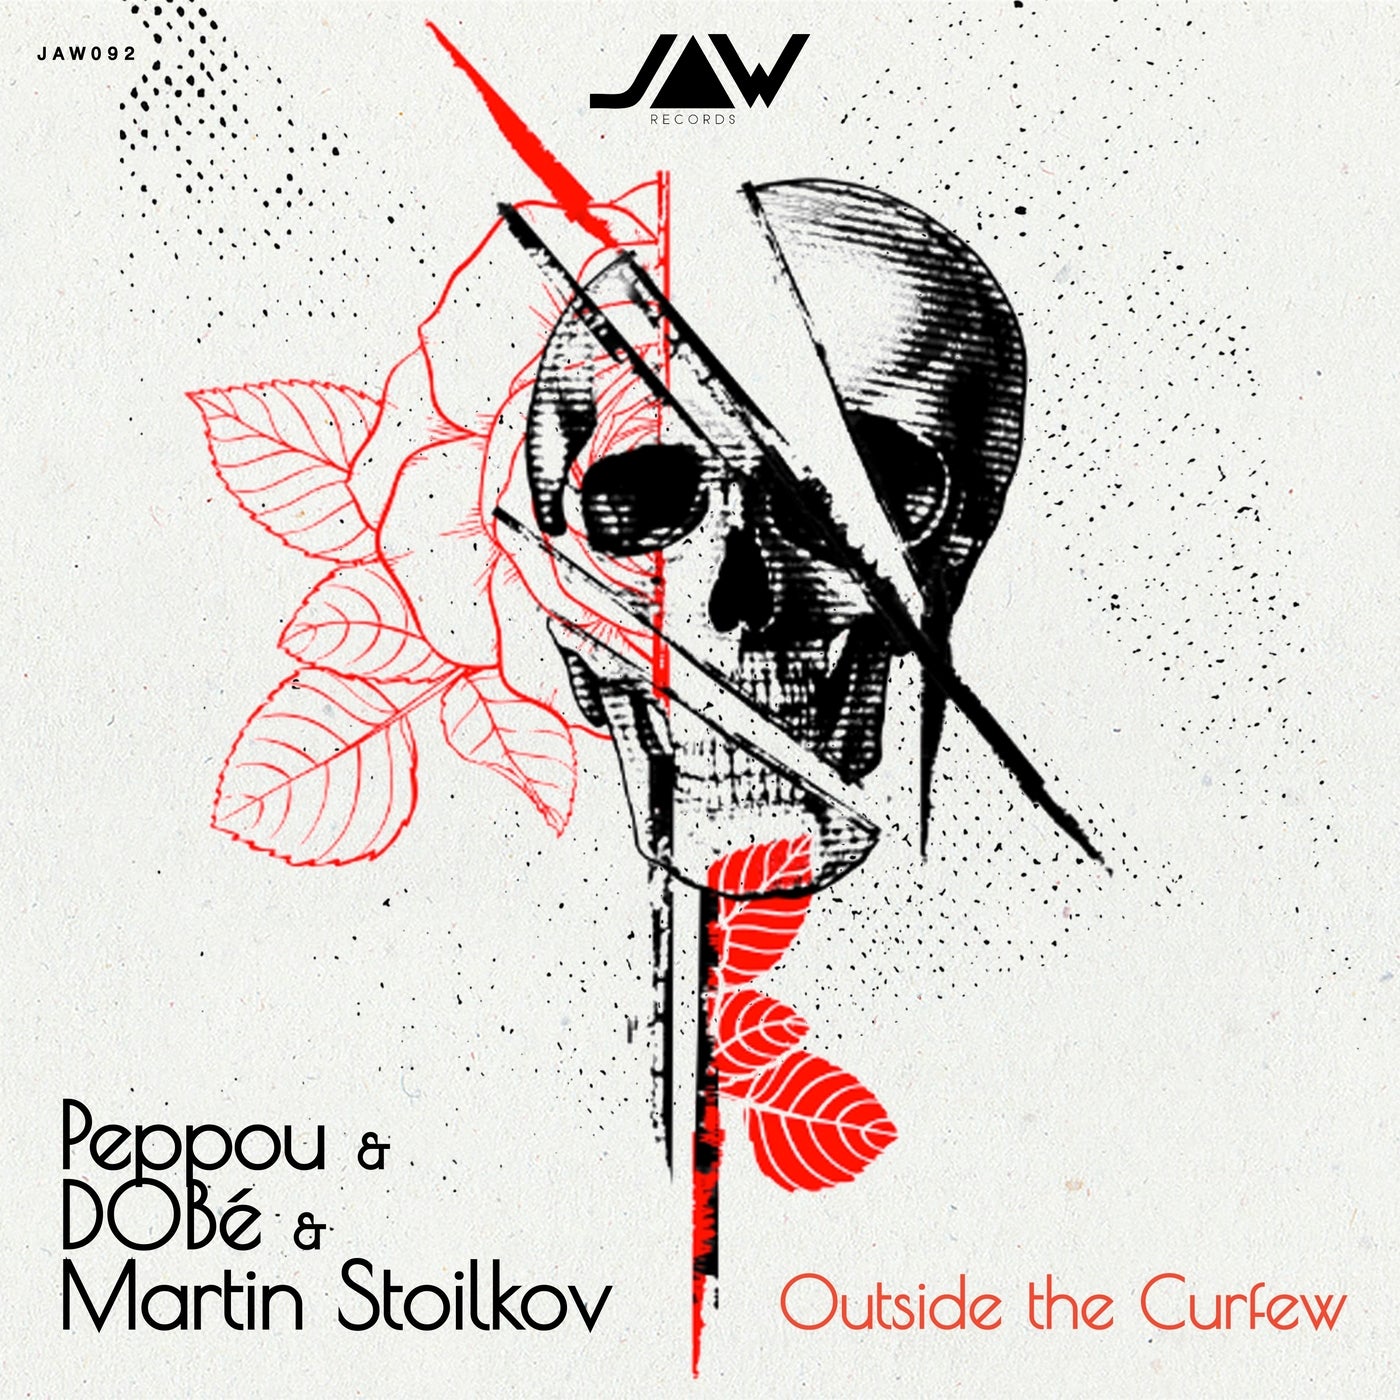 image cover: Peppou, Martin Stoilkov, DOBé - Outside the Curfew / JANNOWITZ092